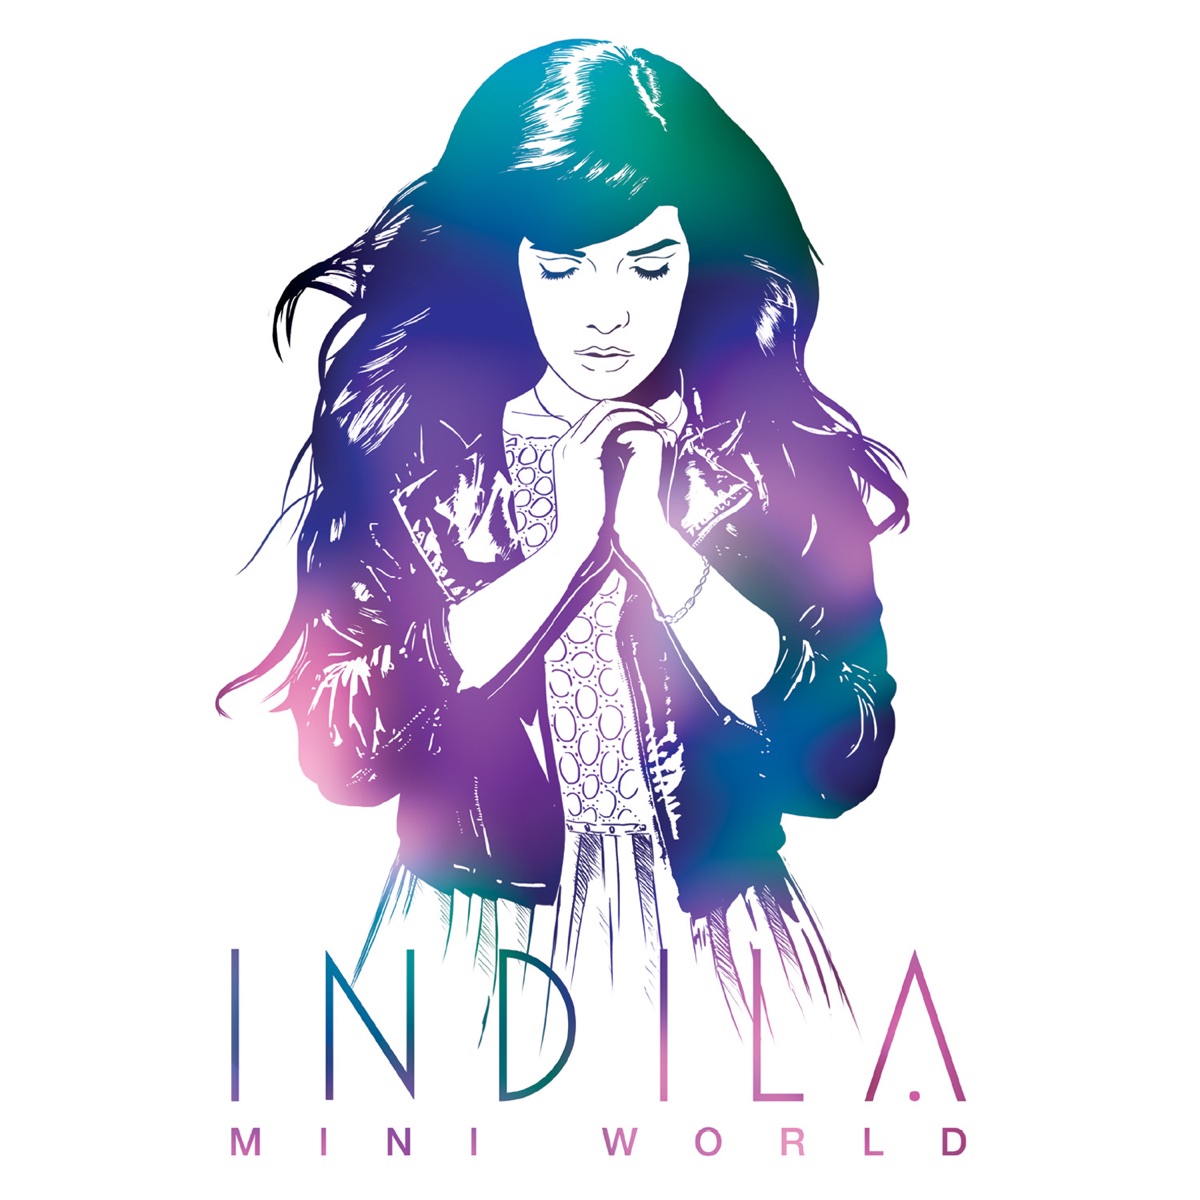 Mini World (album) - Wikipedia